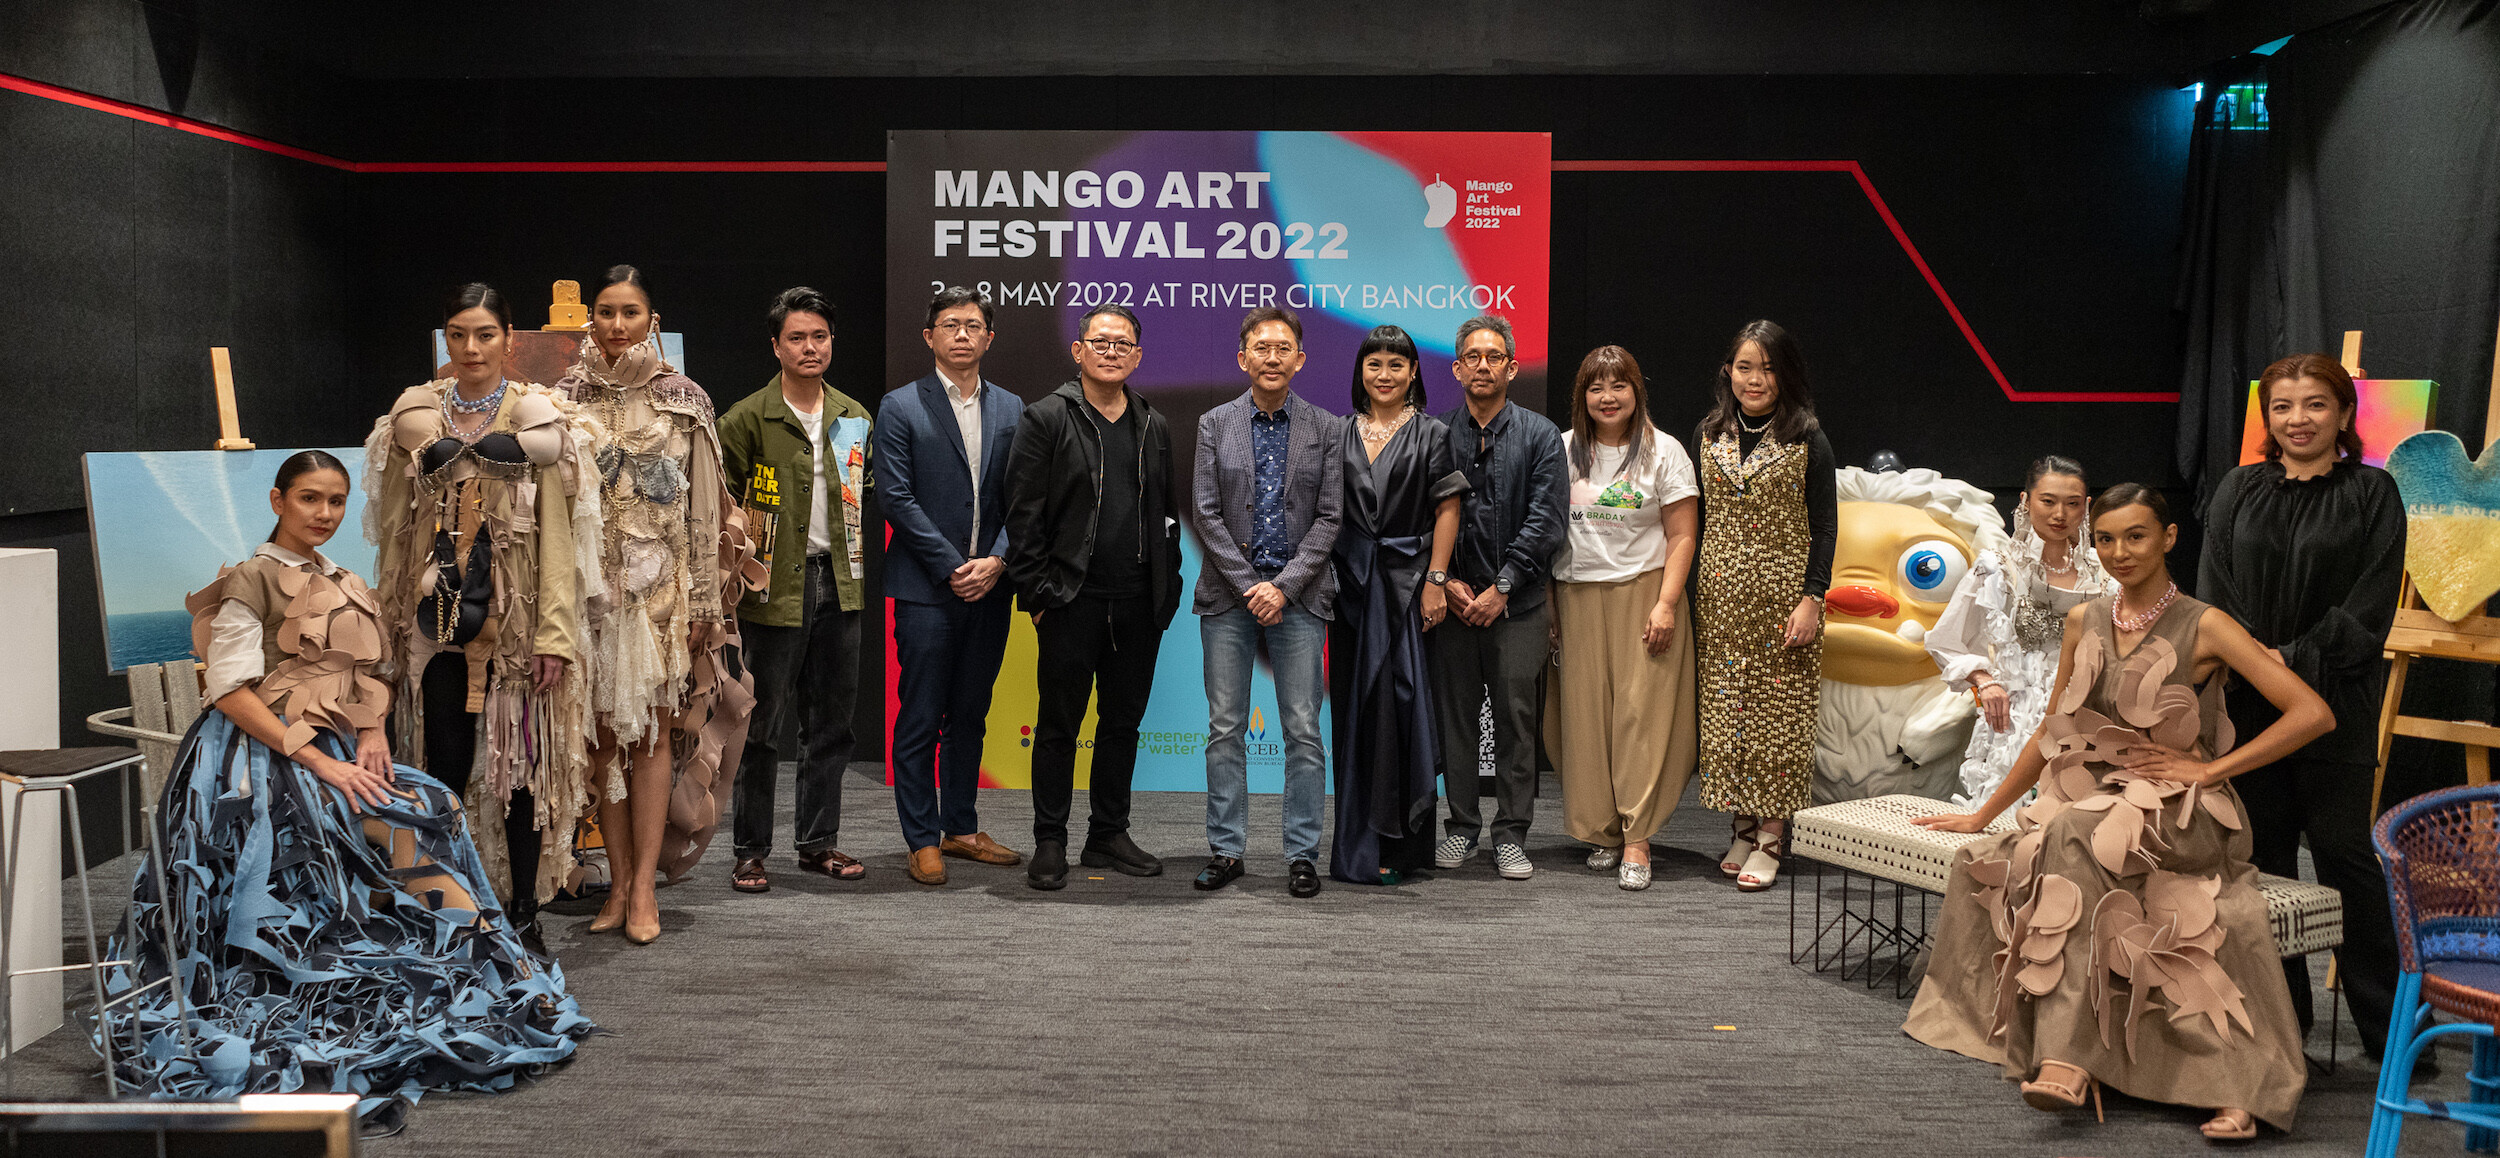 "Mango Art Festival 2022" เทศกาลศิลปะที่ครบเครื่องที่สุดในประเทศไทย พร้อมเปิดตัวอีกครั้งกลางปีนี้ที่ River City Bangkok ย่านเจริญกรุง